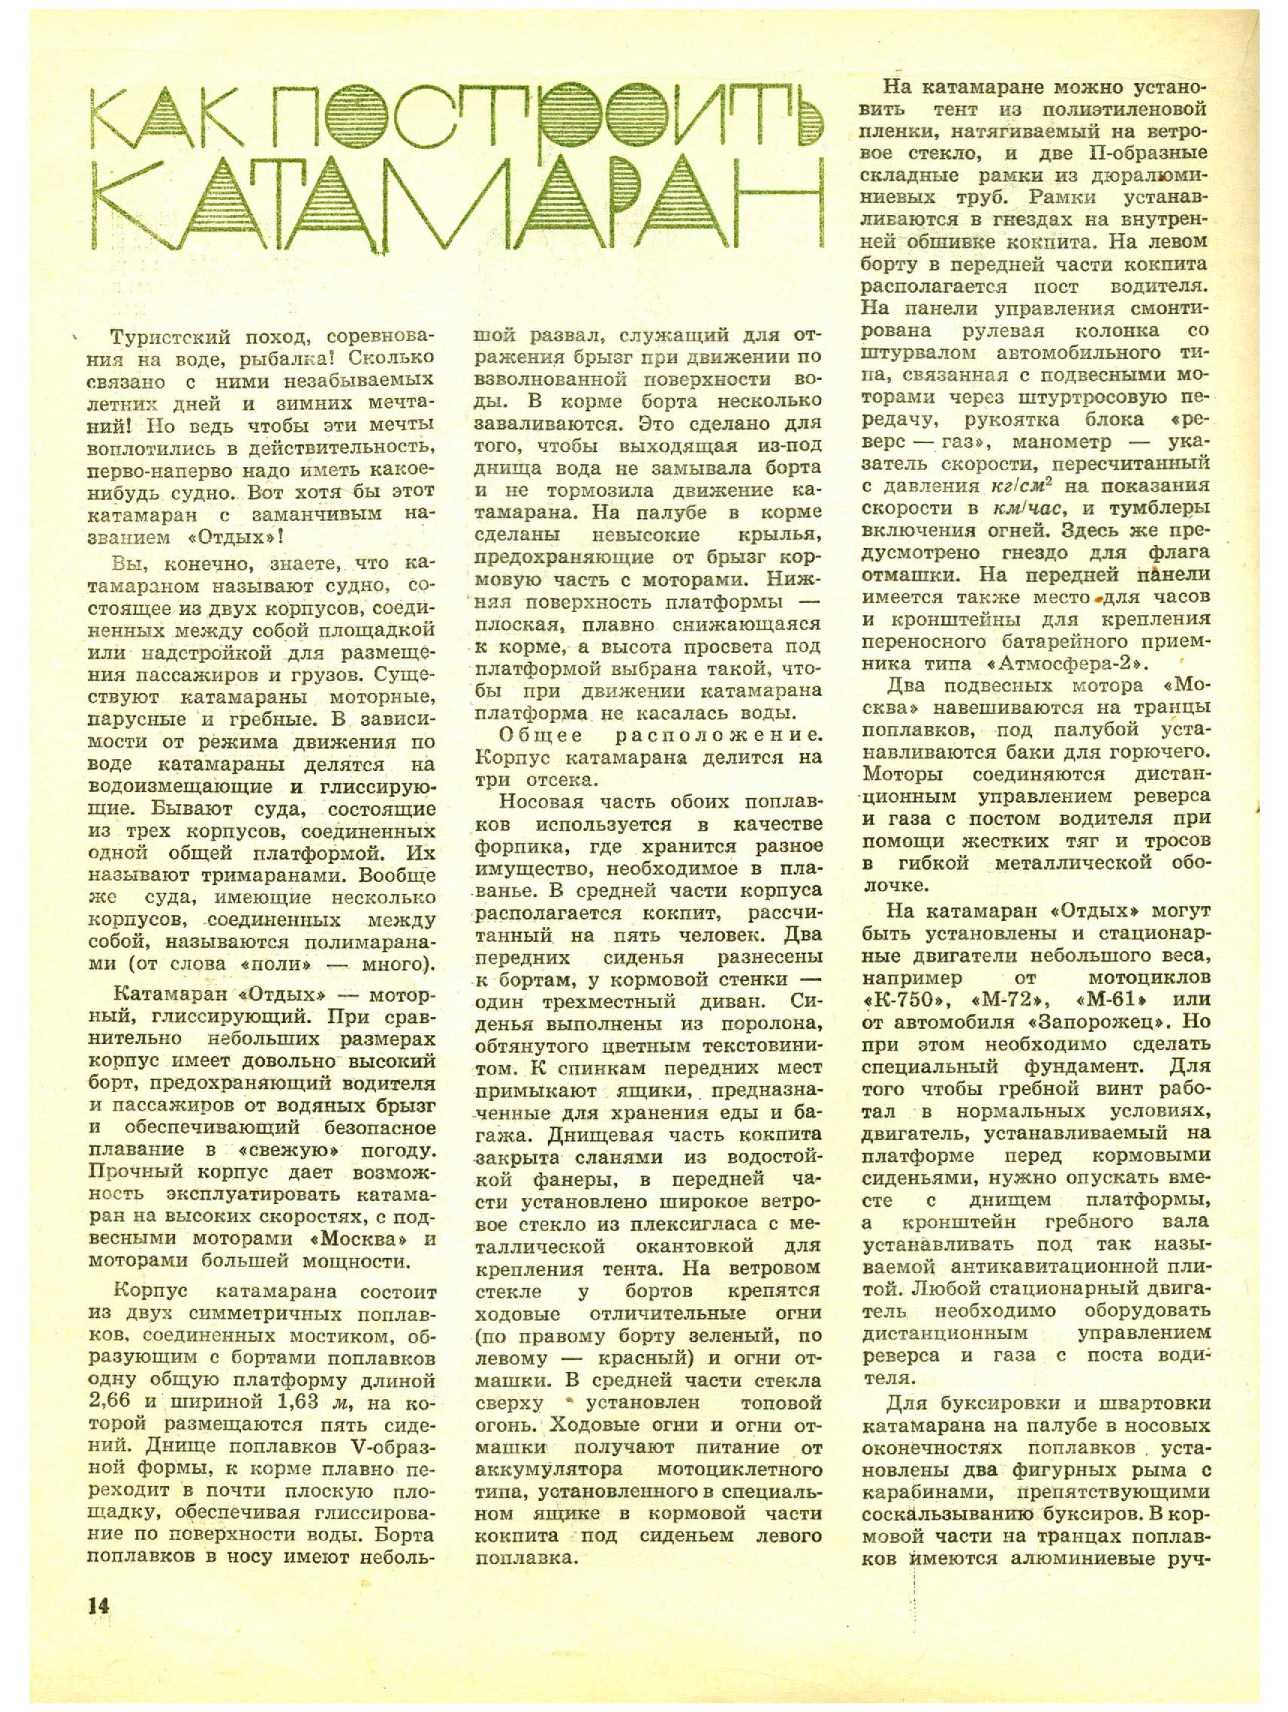 ЮМК 12, 1965, 14 c.